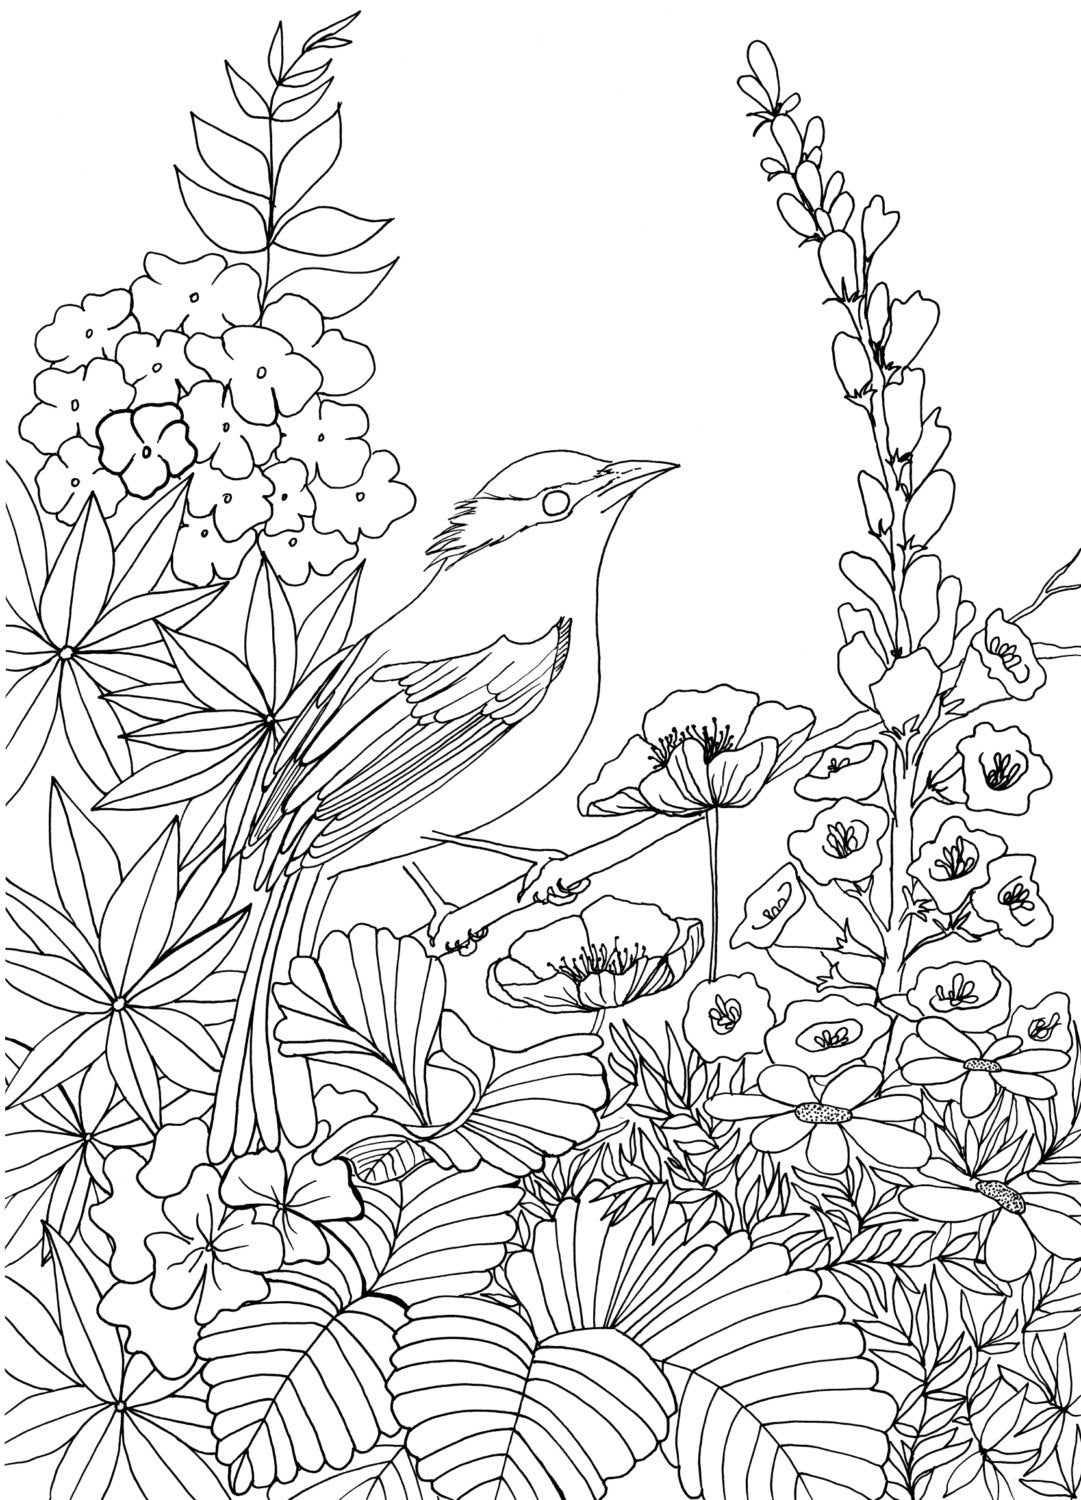 Bird in Chelsea Garden   Colouring Page